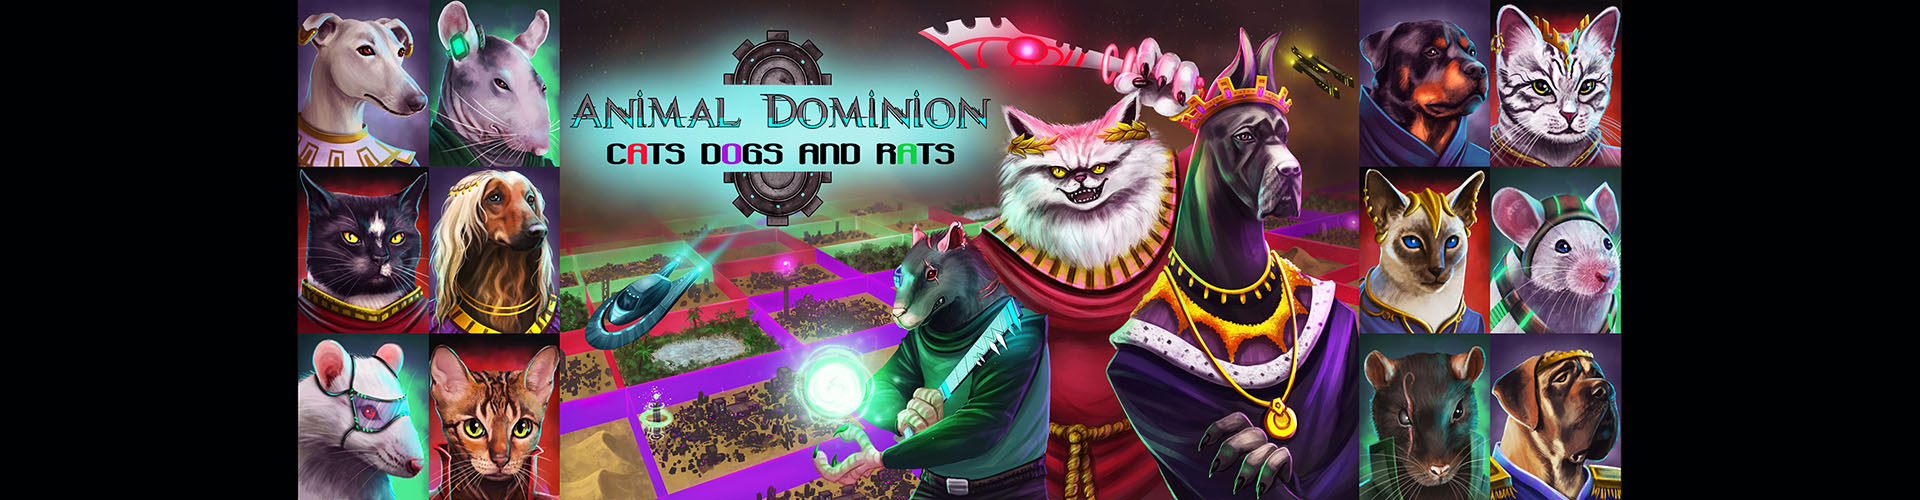 Animal Dominion